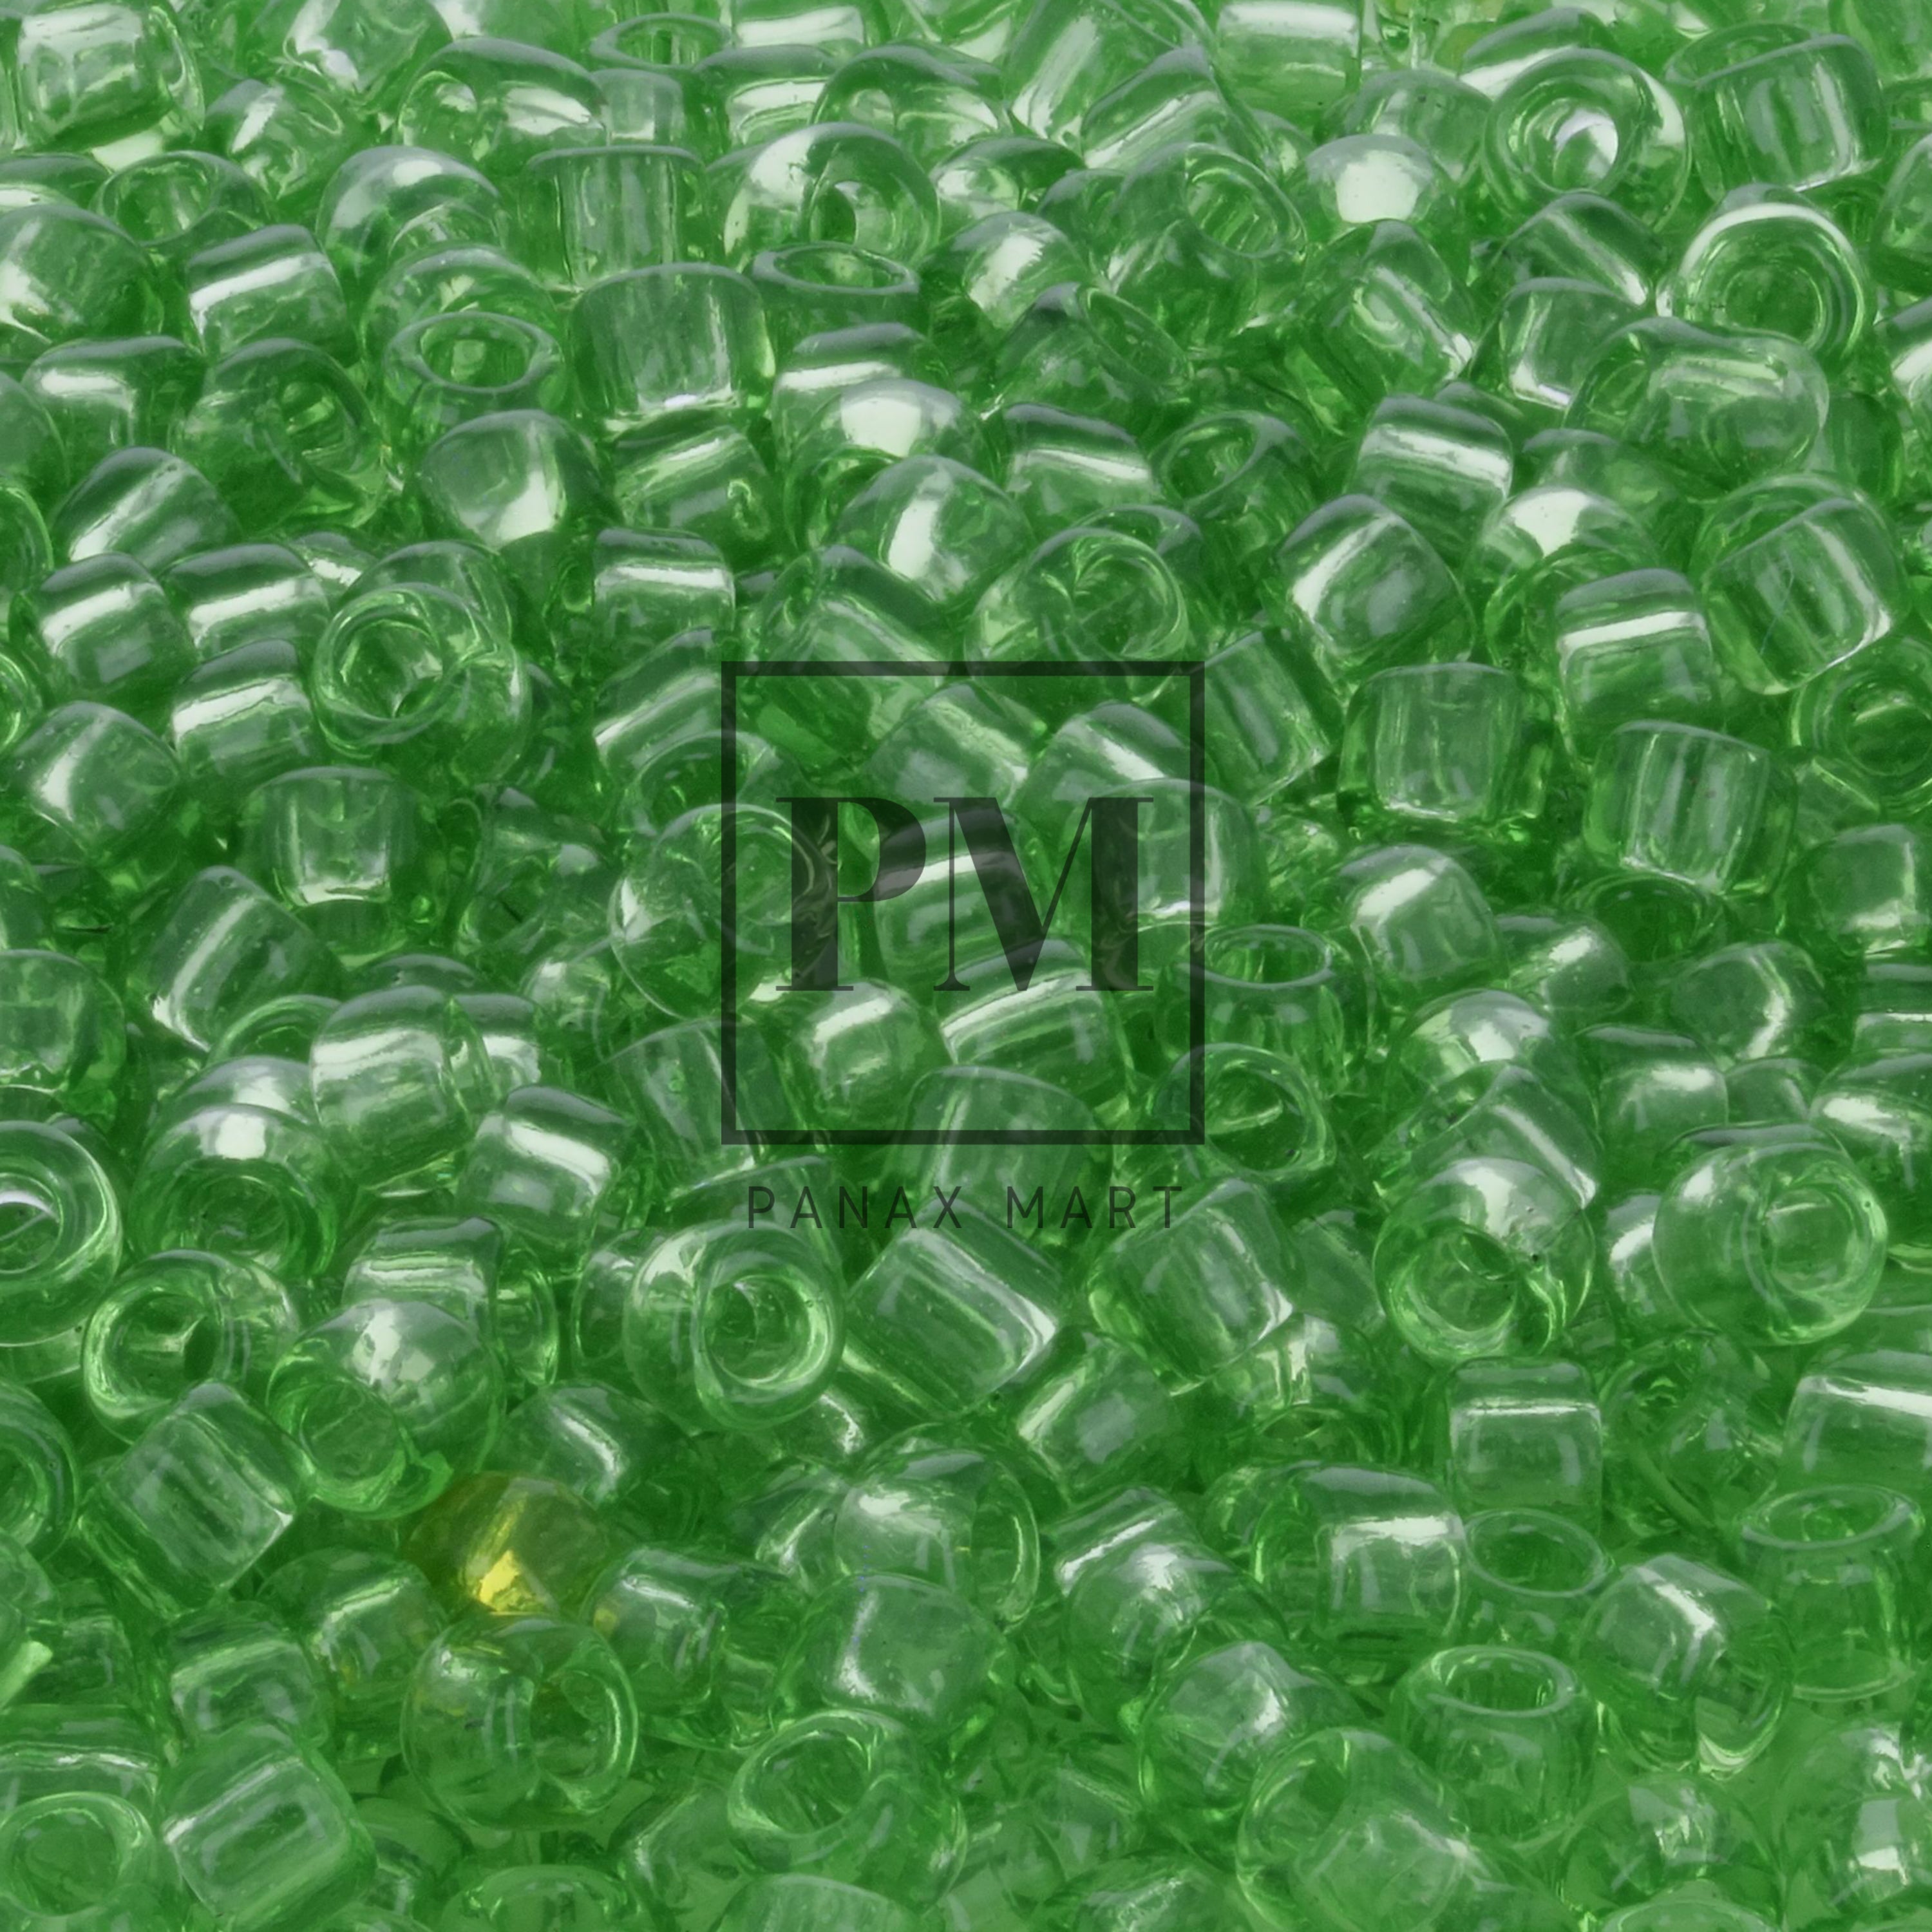 Matsuno Glass Beads (MGB) 11/0 RR 19 - Panax Mart